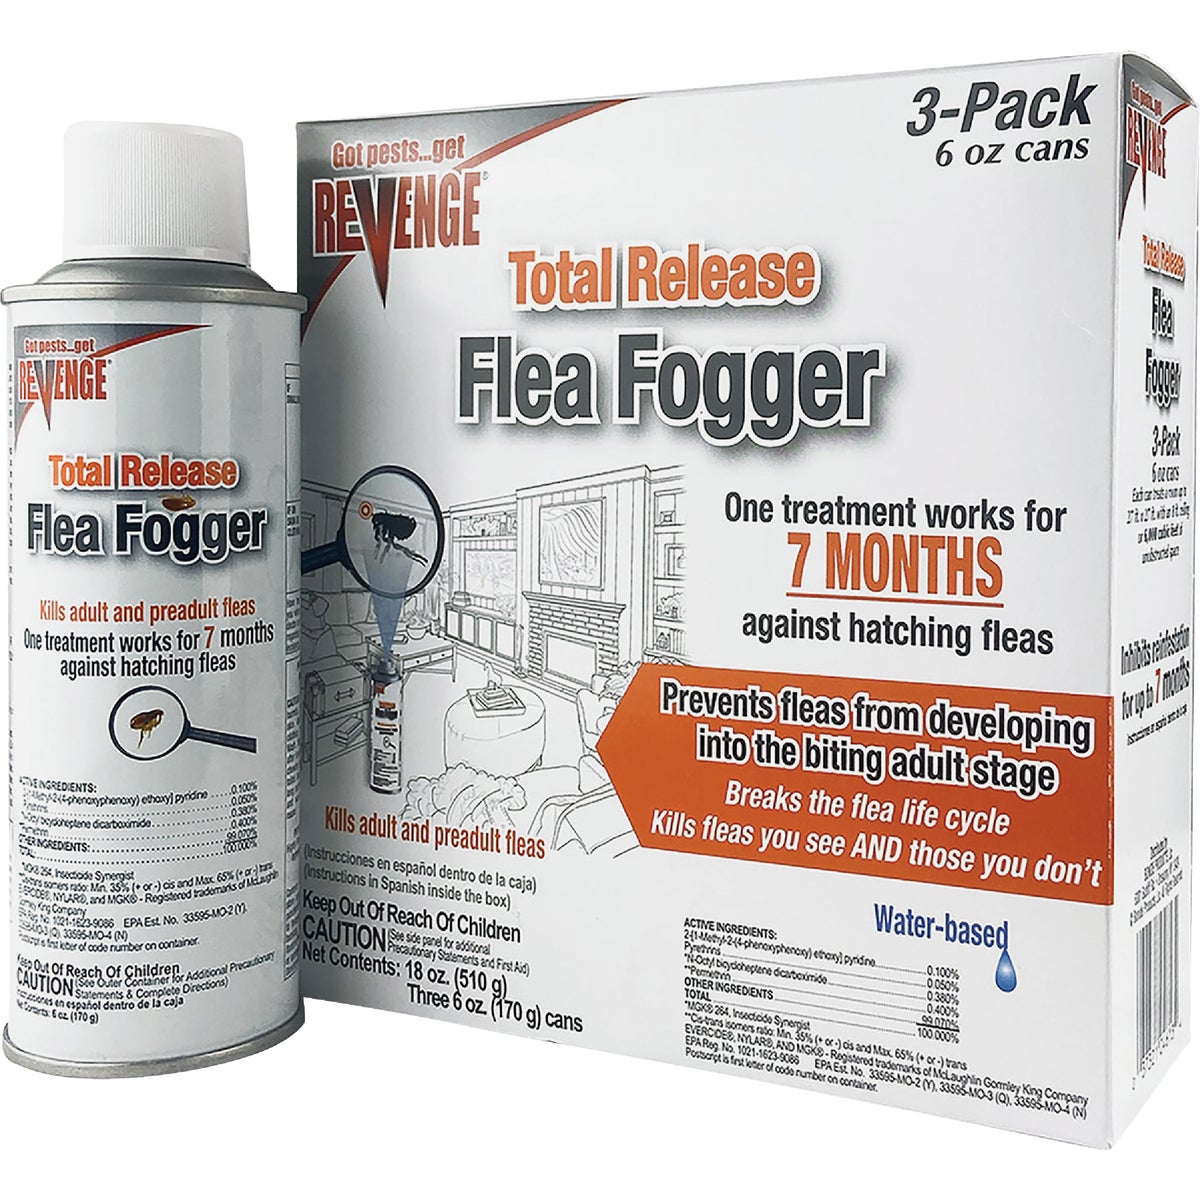 Item 764108, Indoor flea fogger treatment.